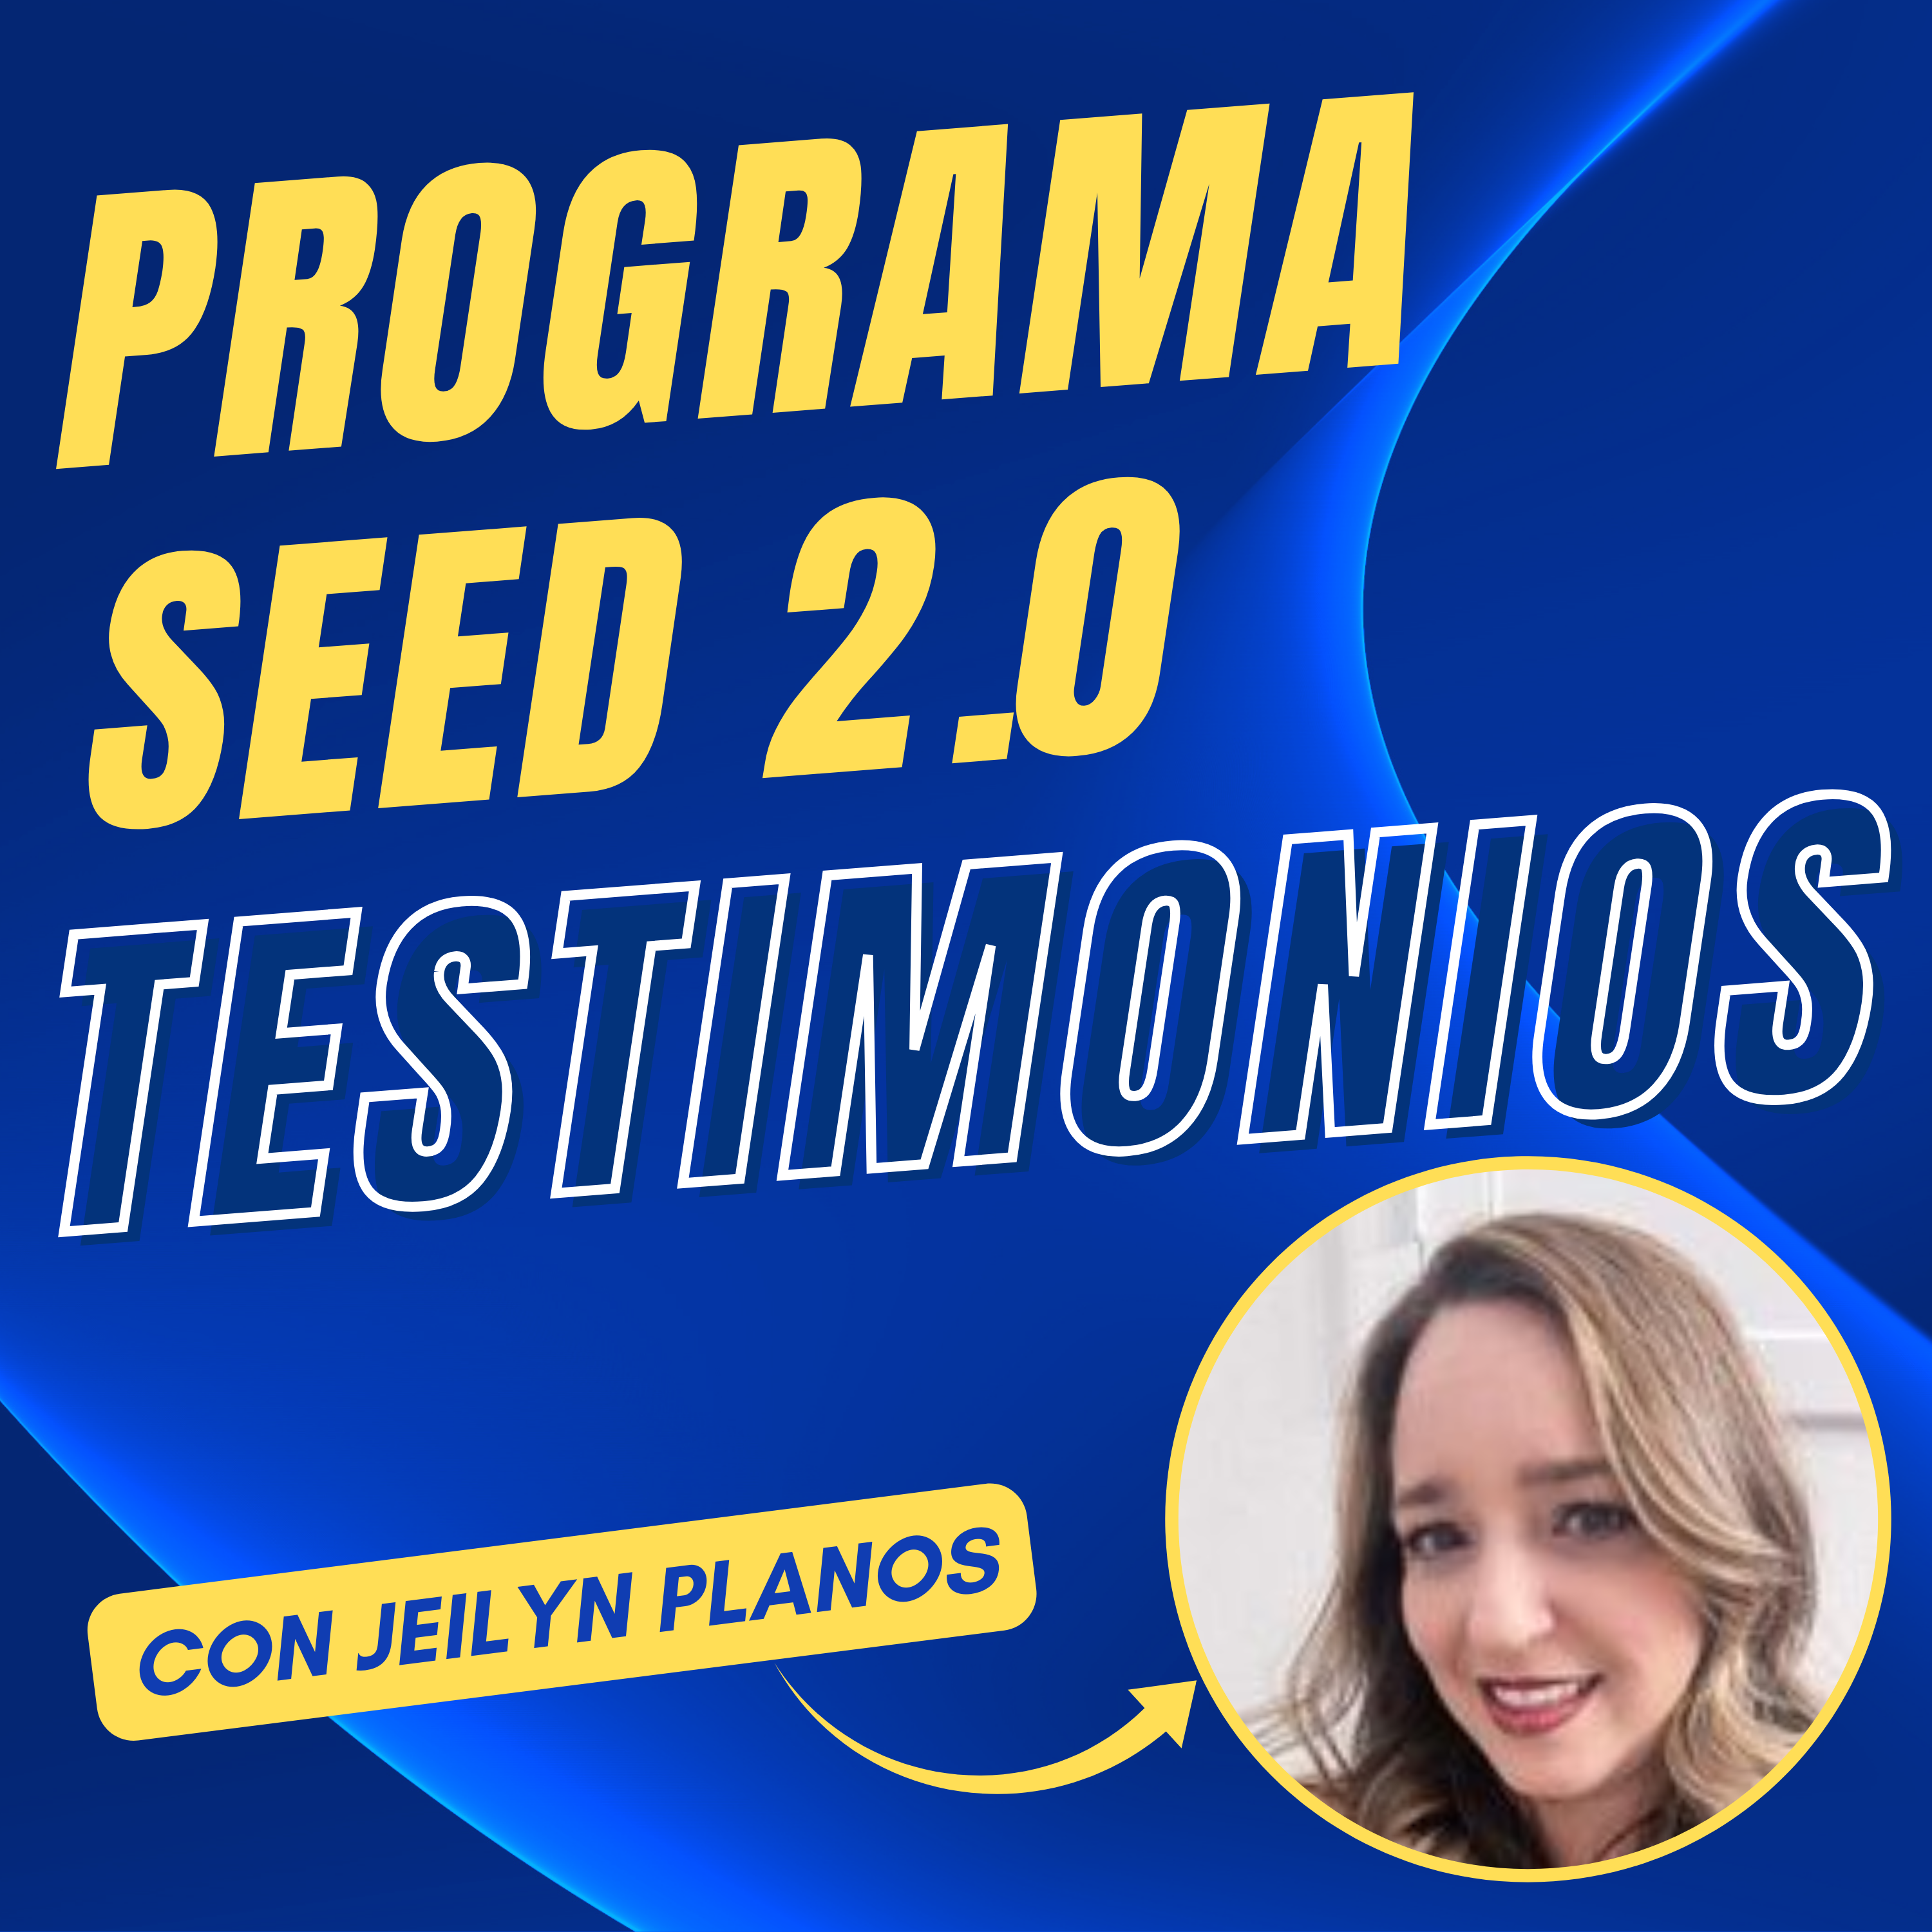 Testimonio de Jeilyn Planos sobre el programa SEED 2.0